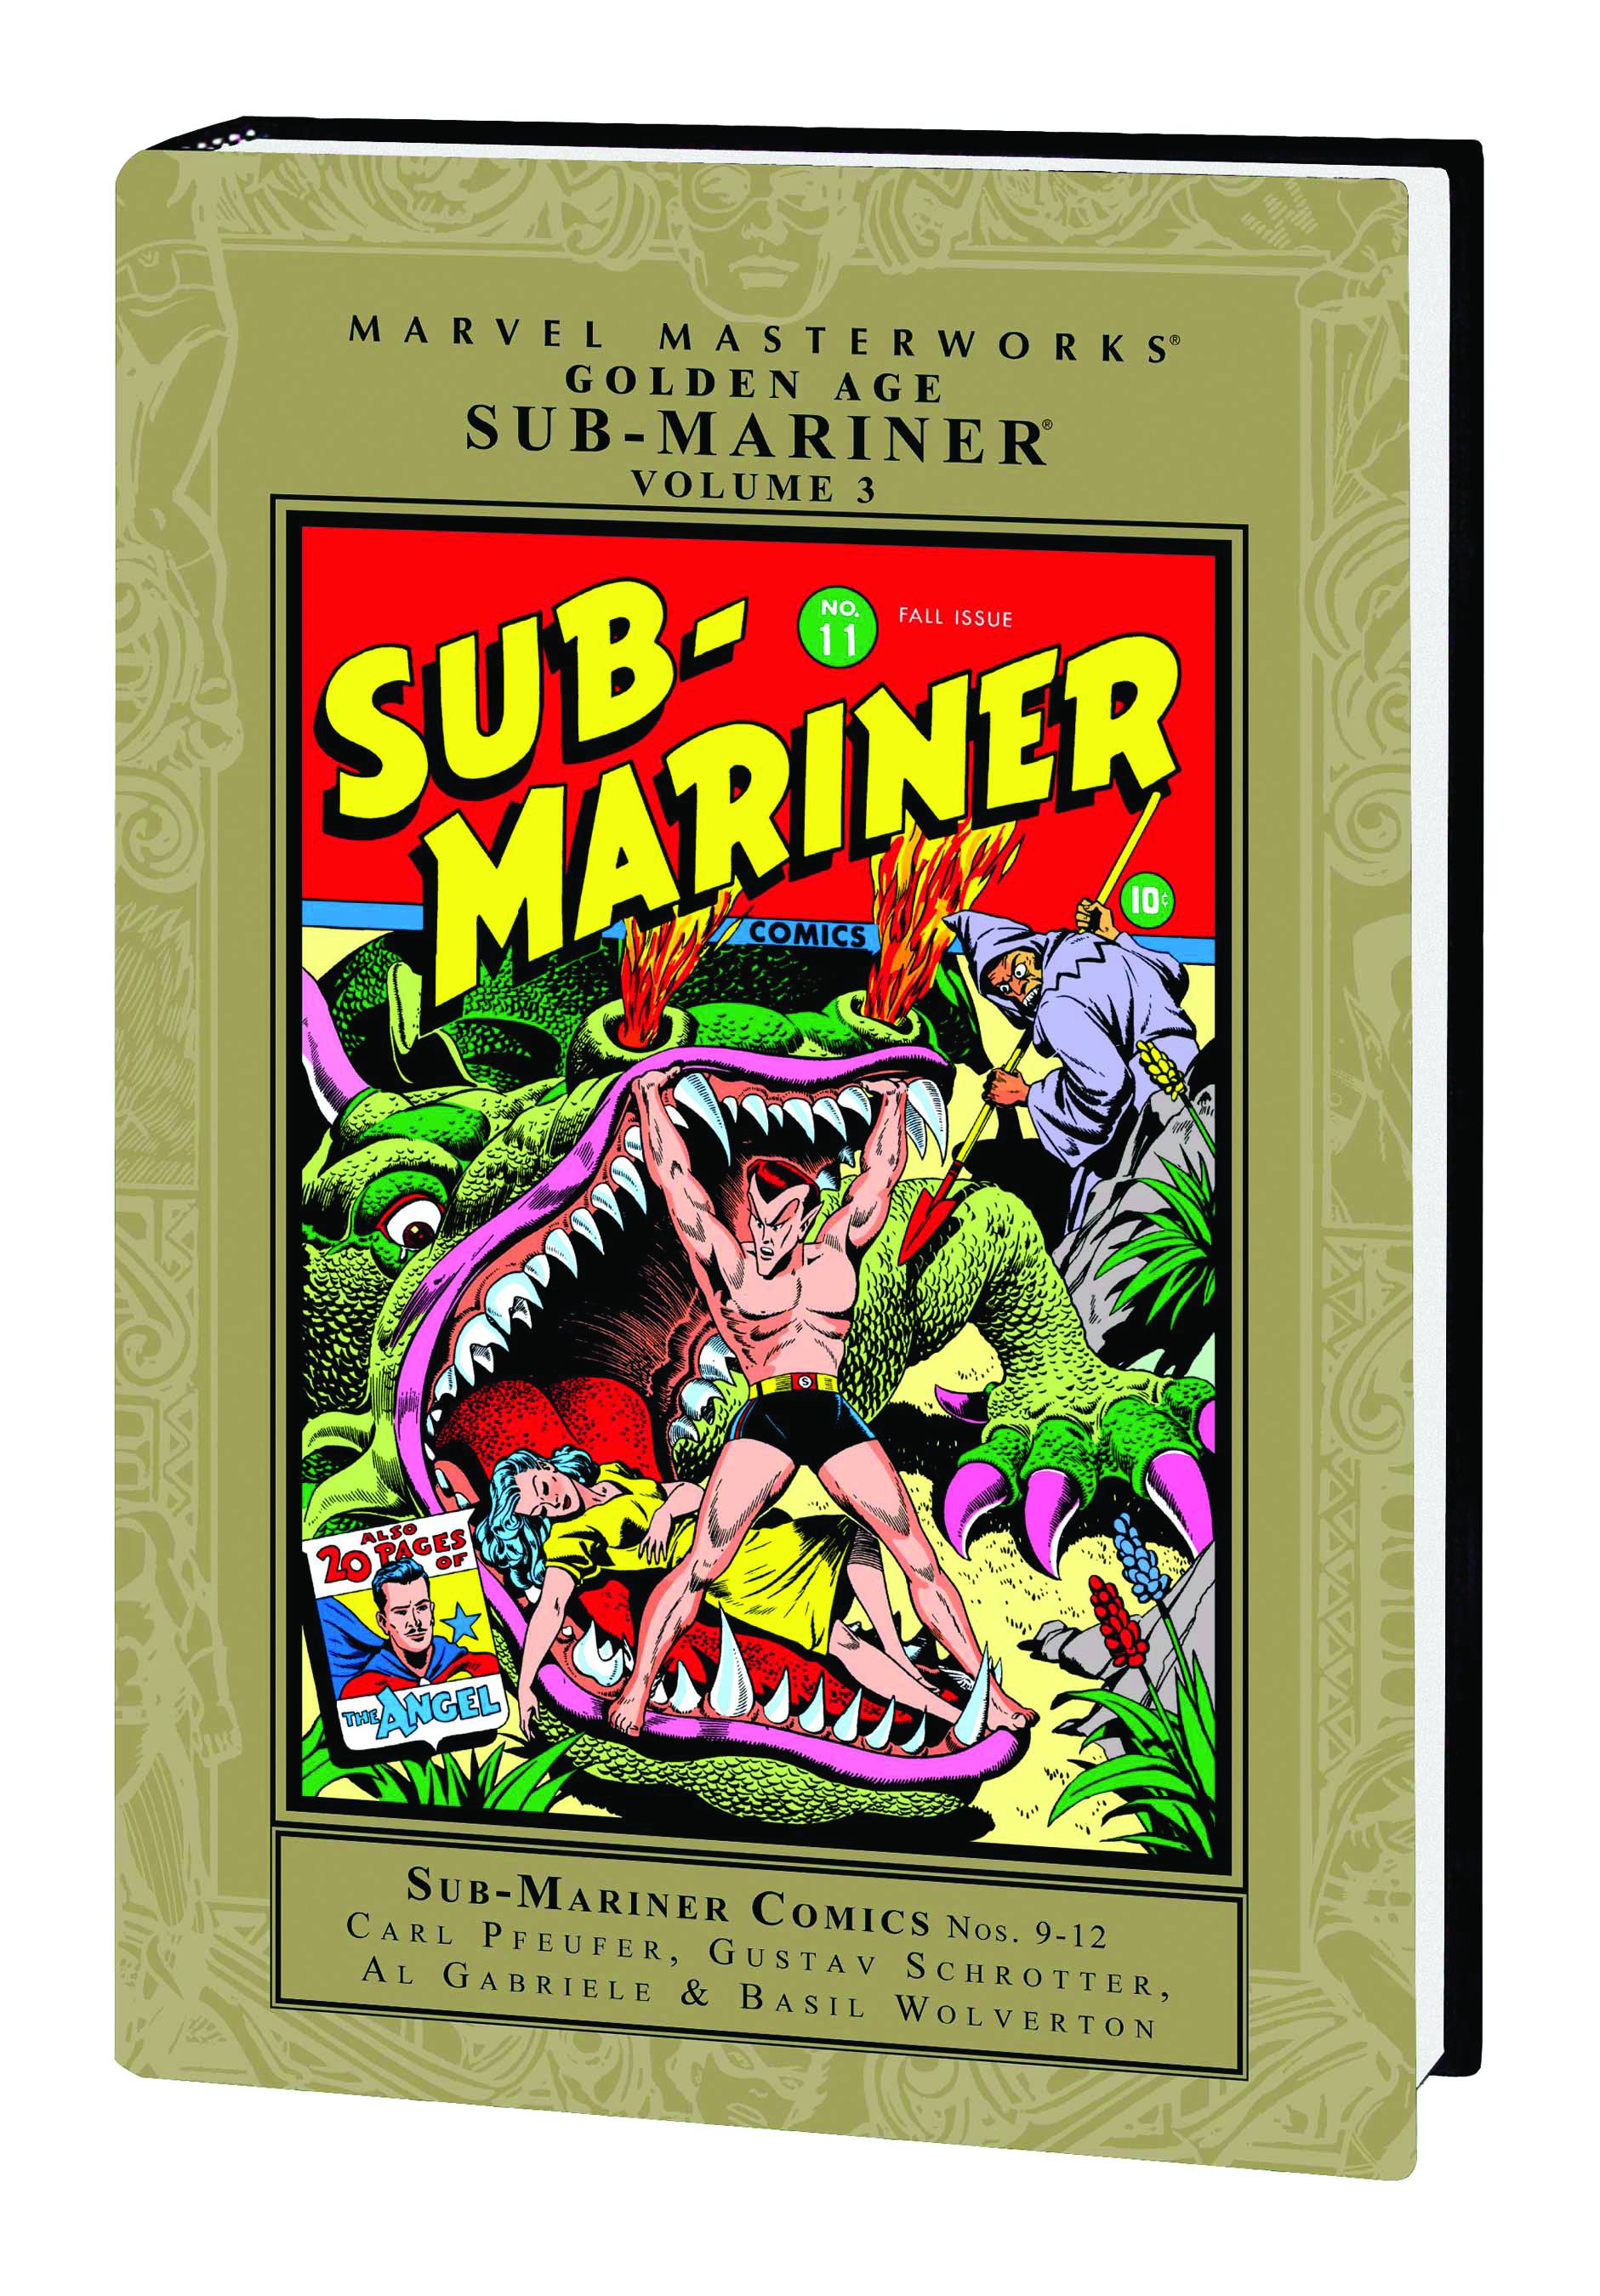 Marvel Masterworks Golden Age Sub-Mariner Hardcover Volume 3